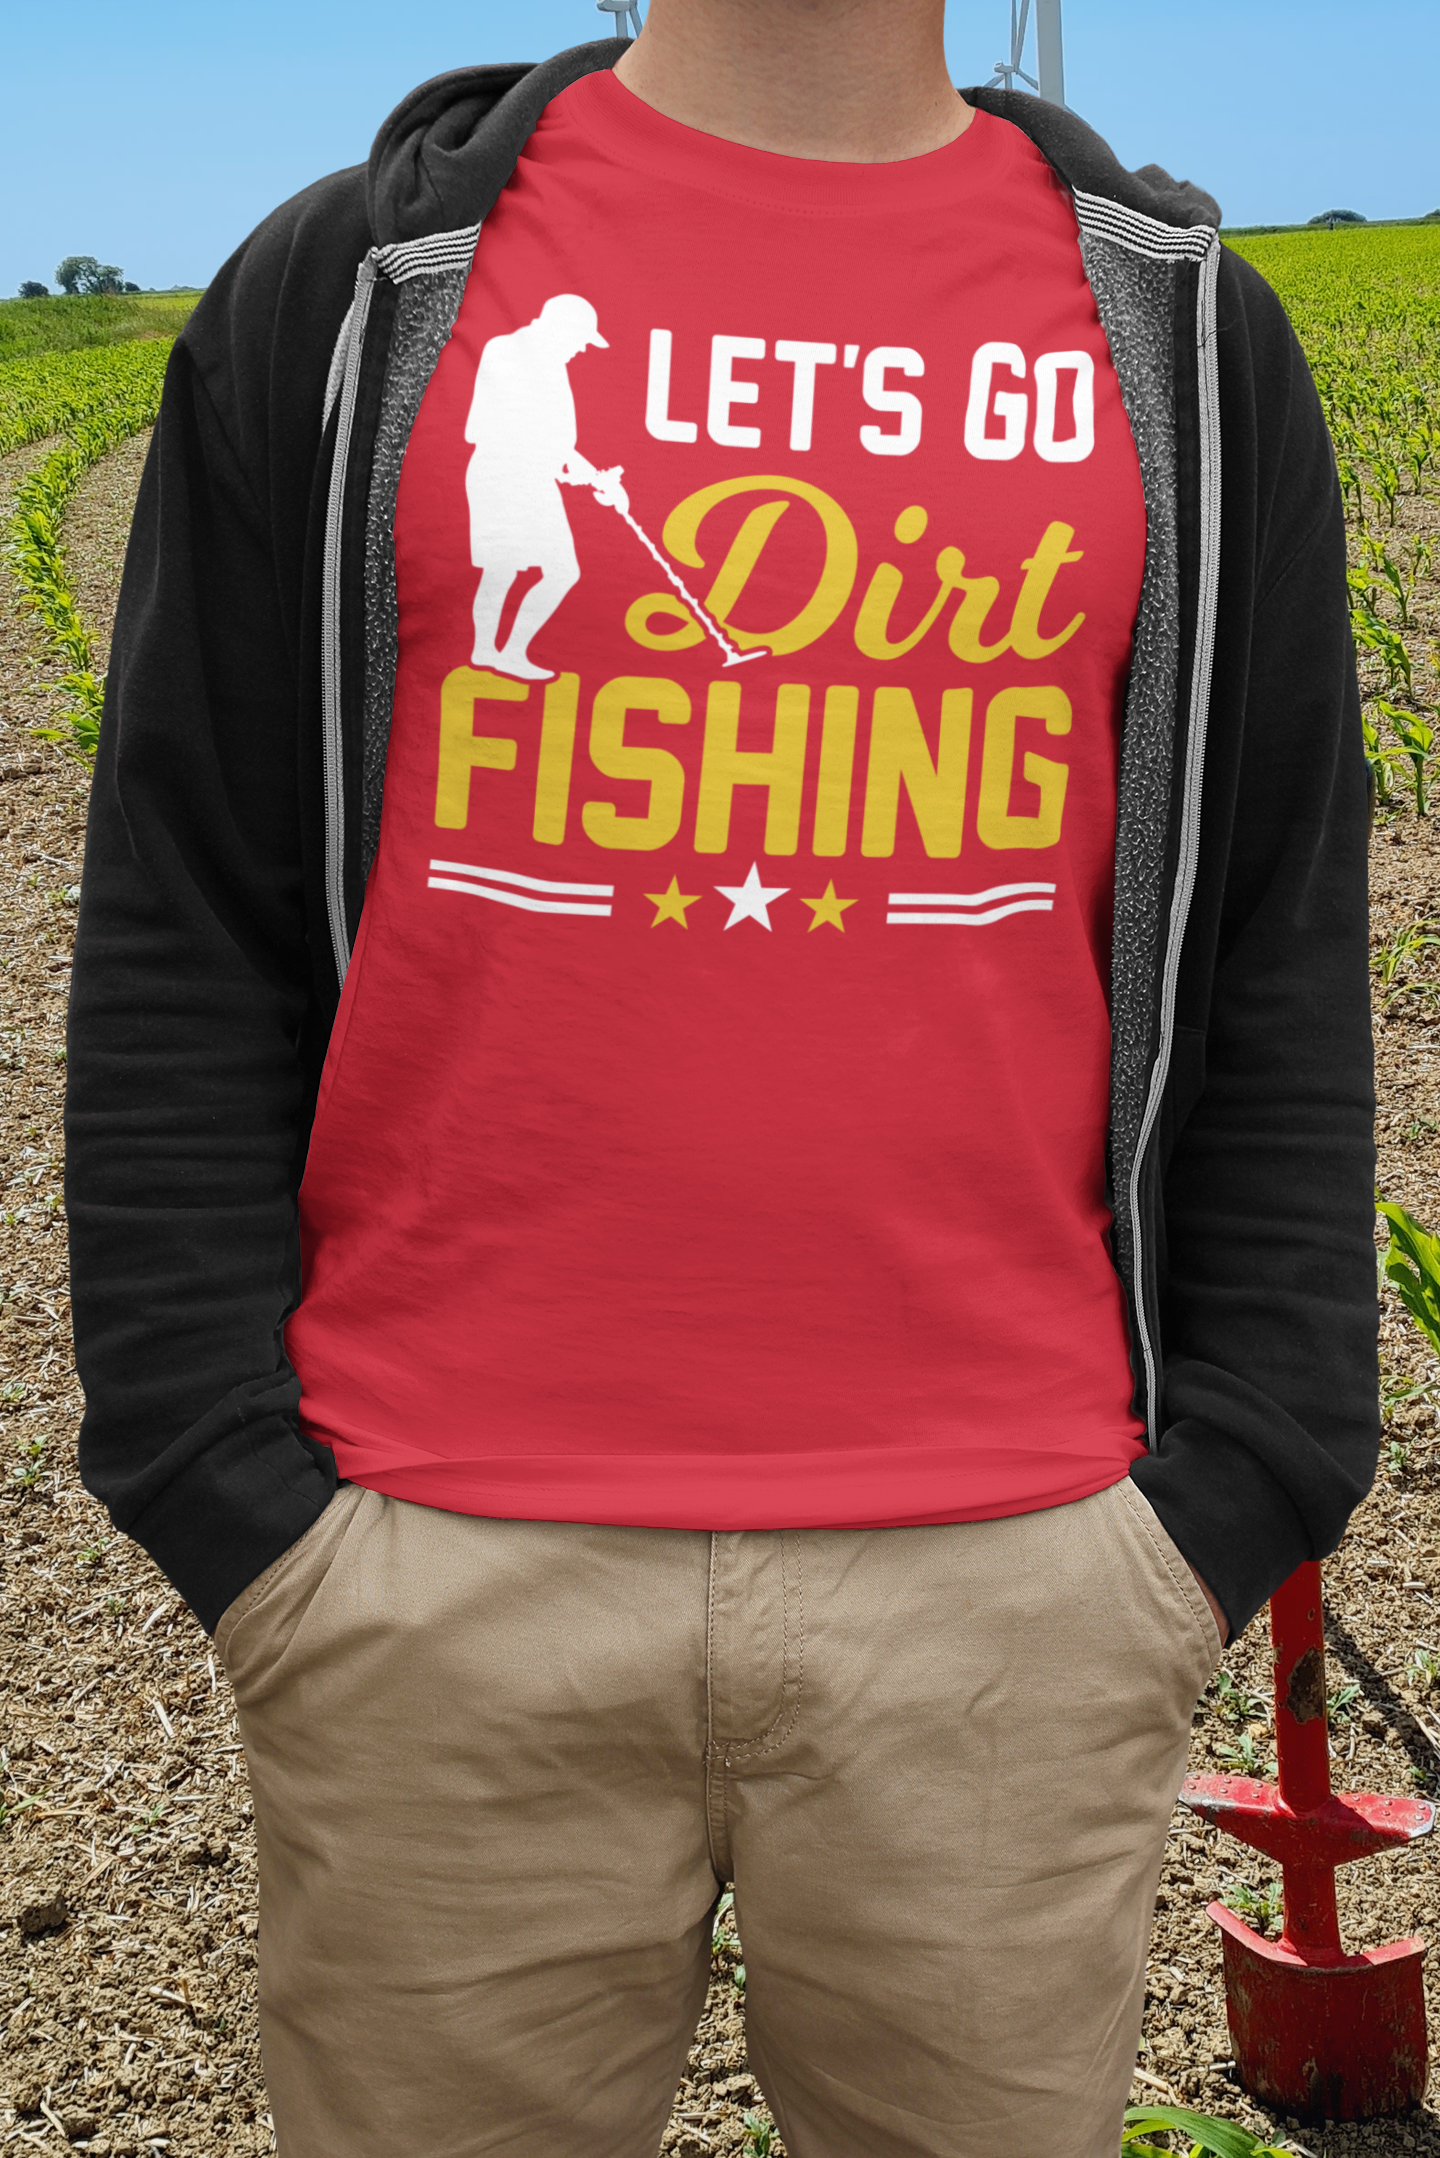 Let's go dirt fishing T-shirt